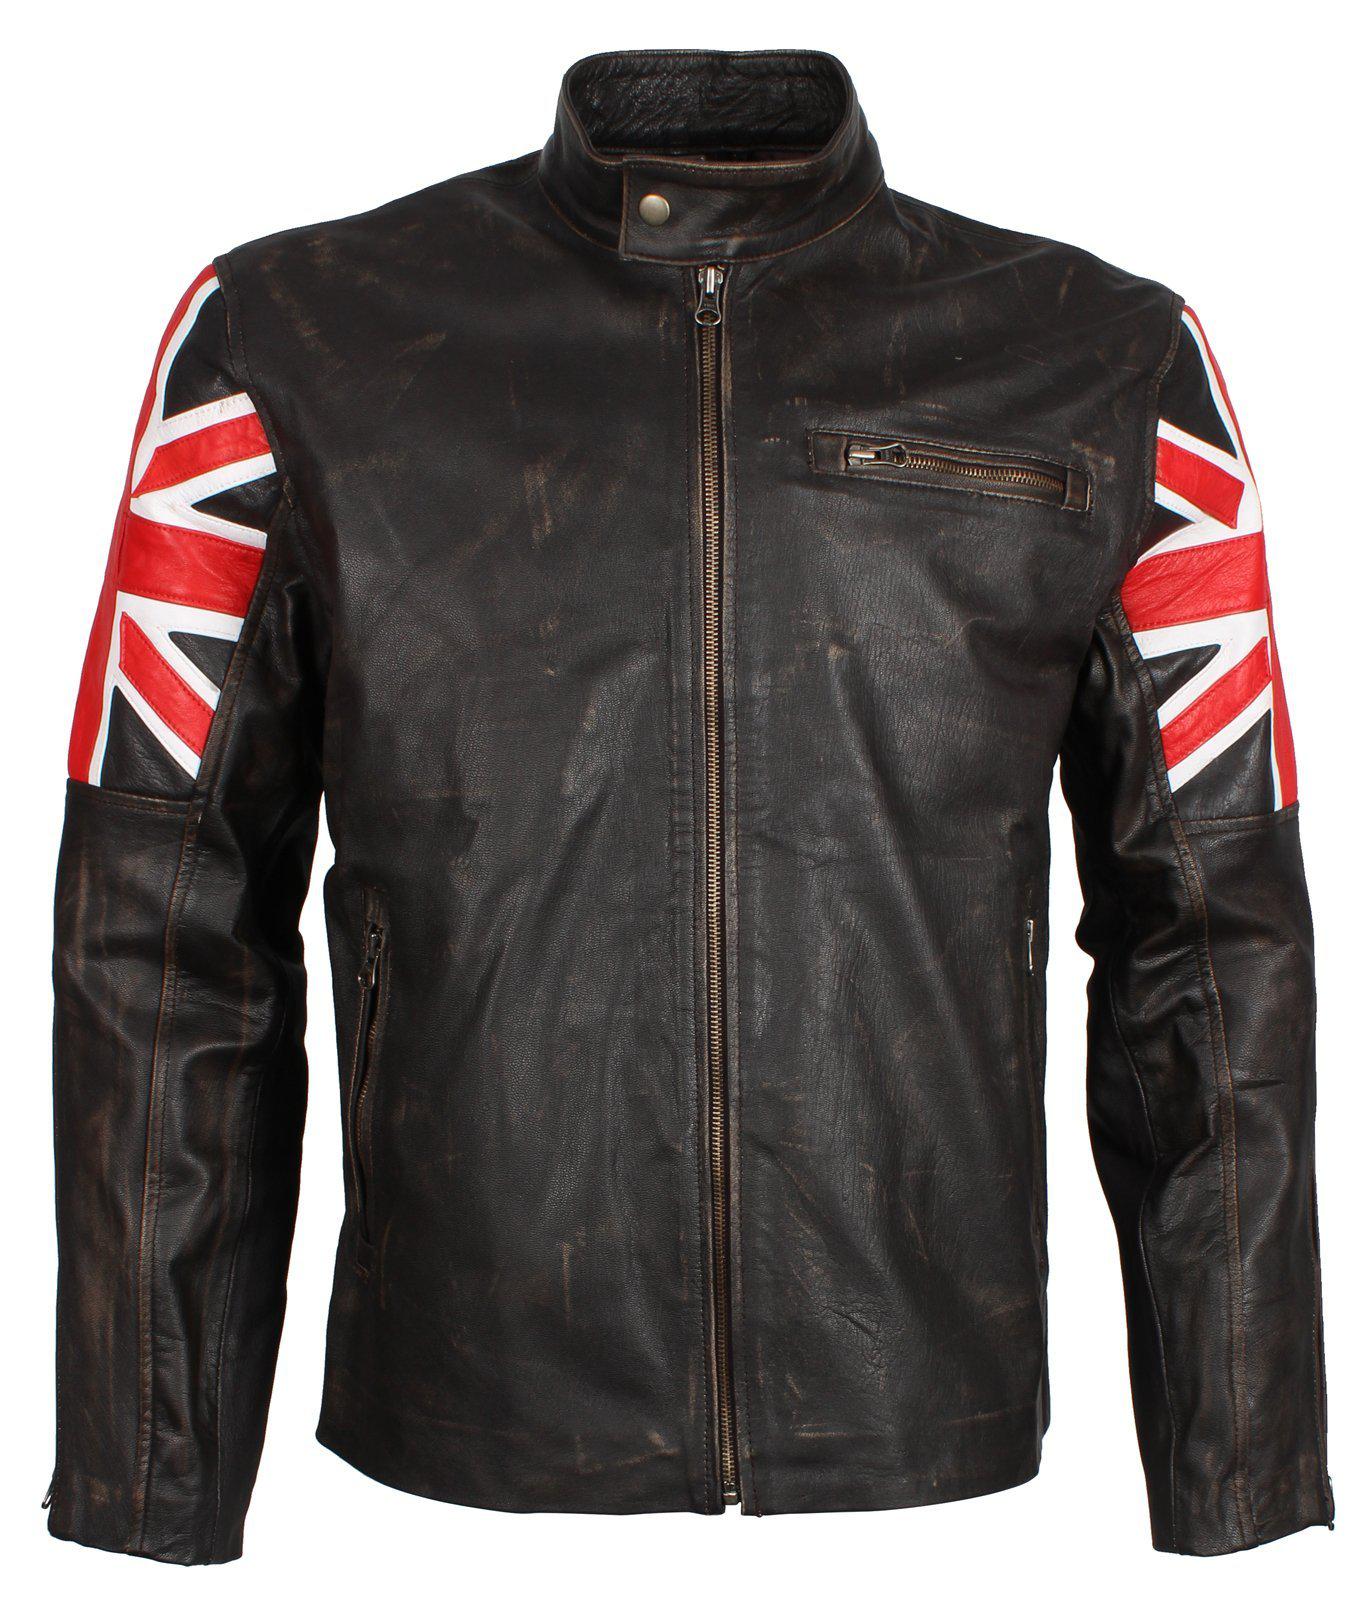 Union Jack British Flag Jacket in Distressed Leather